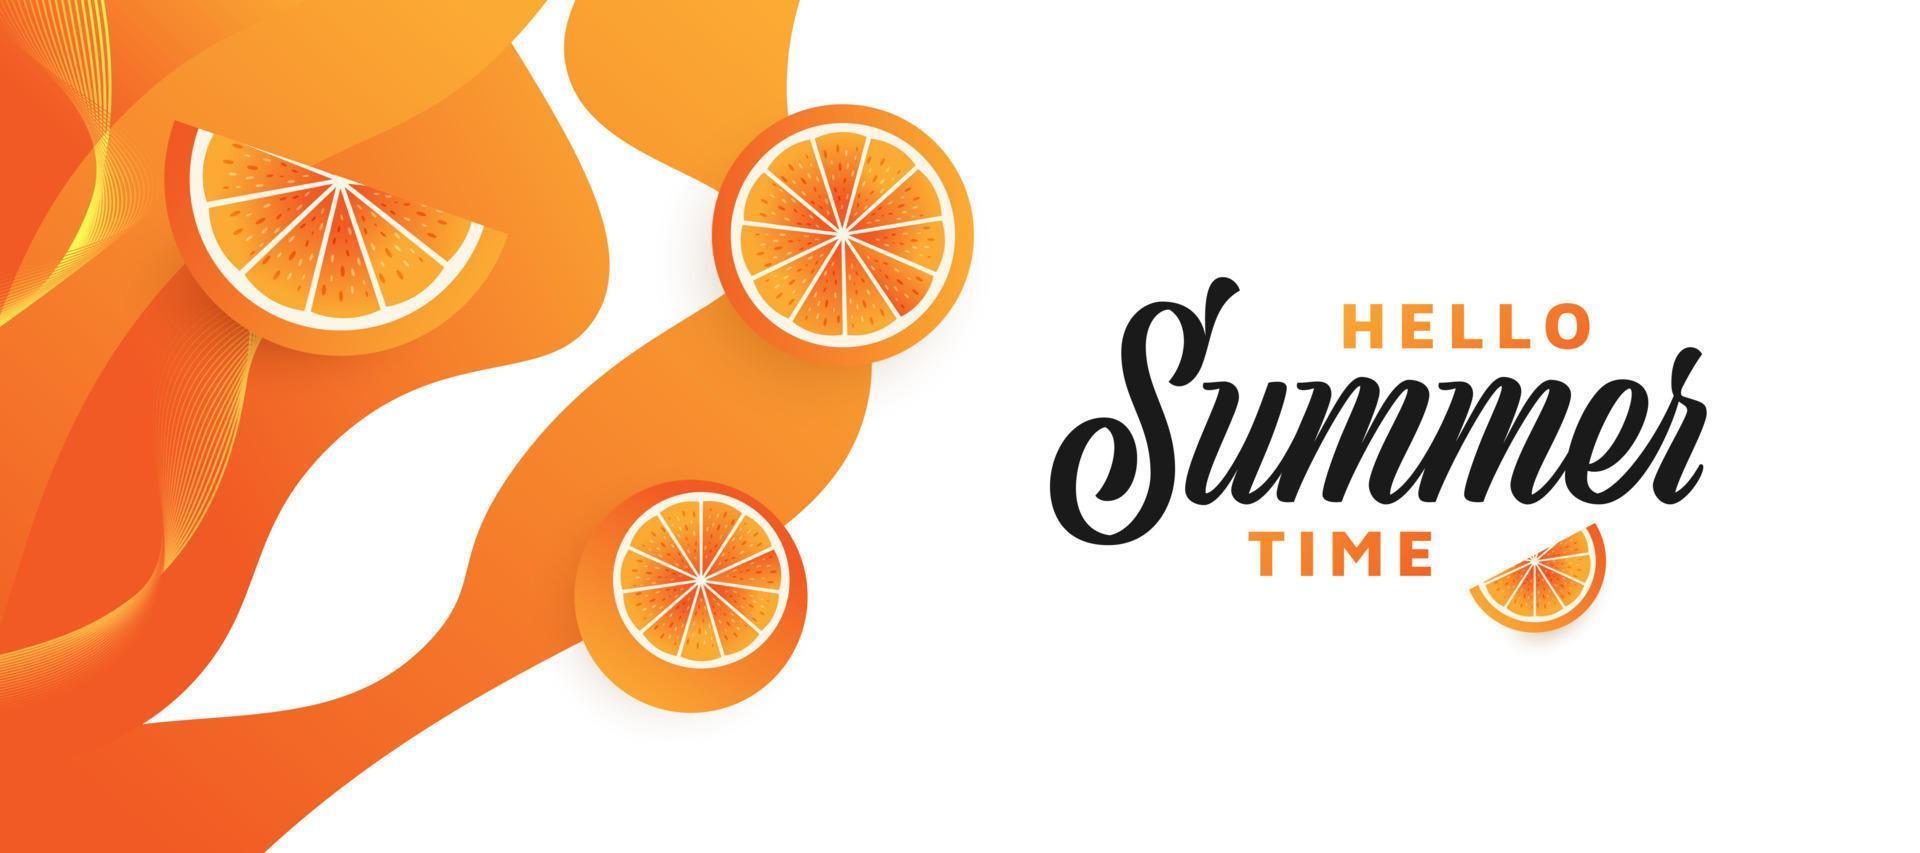 Summer Festive Background with 3D Realistic Oranges. Summer Time Background for Banner or Poster Design. Hello Summer Design vector